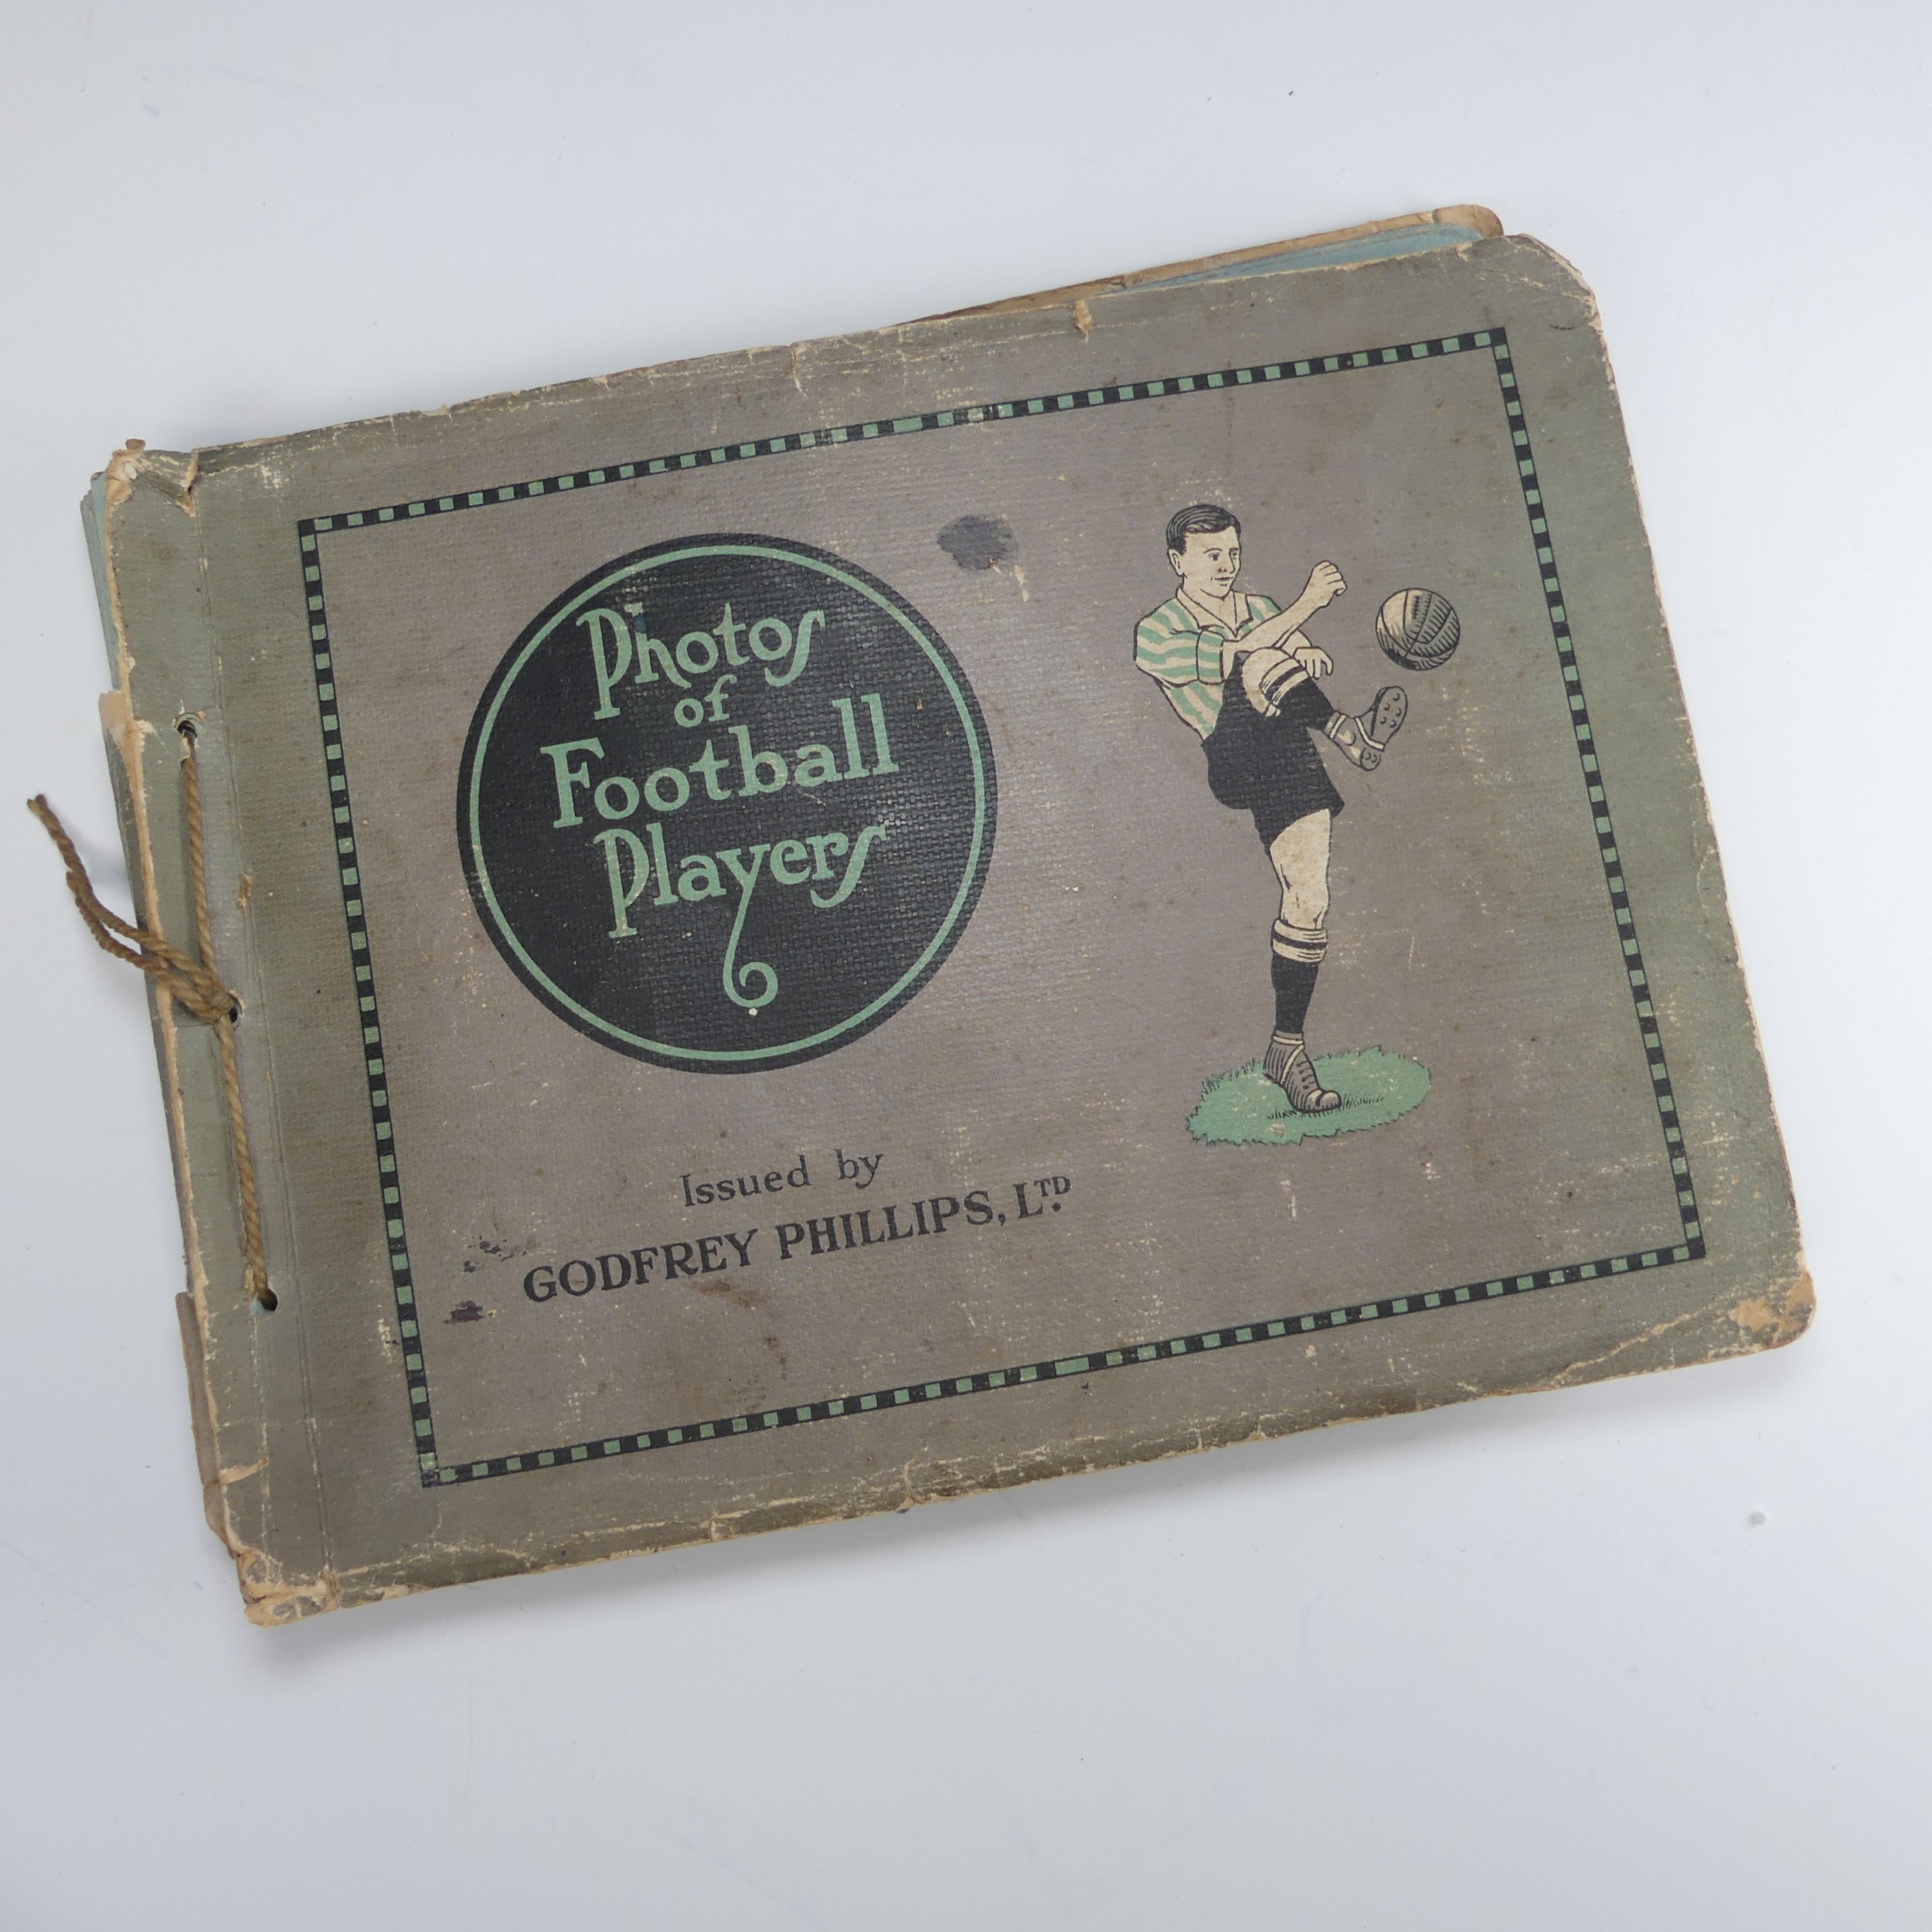 A Godfrey Phillips Ltd. 'Photos of Football Players' card album, 1922/1923, containing Pinnace phot